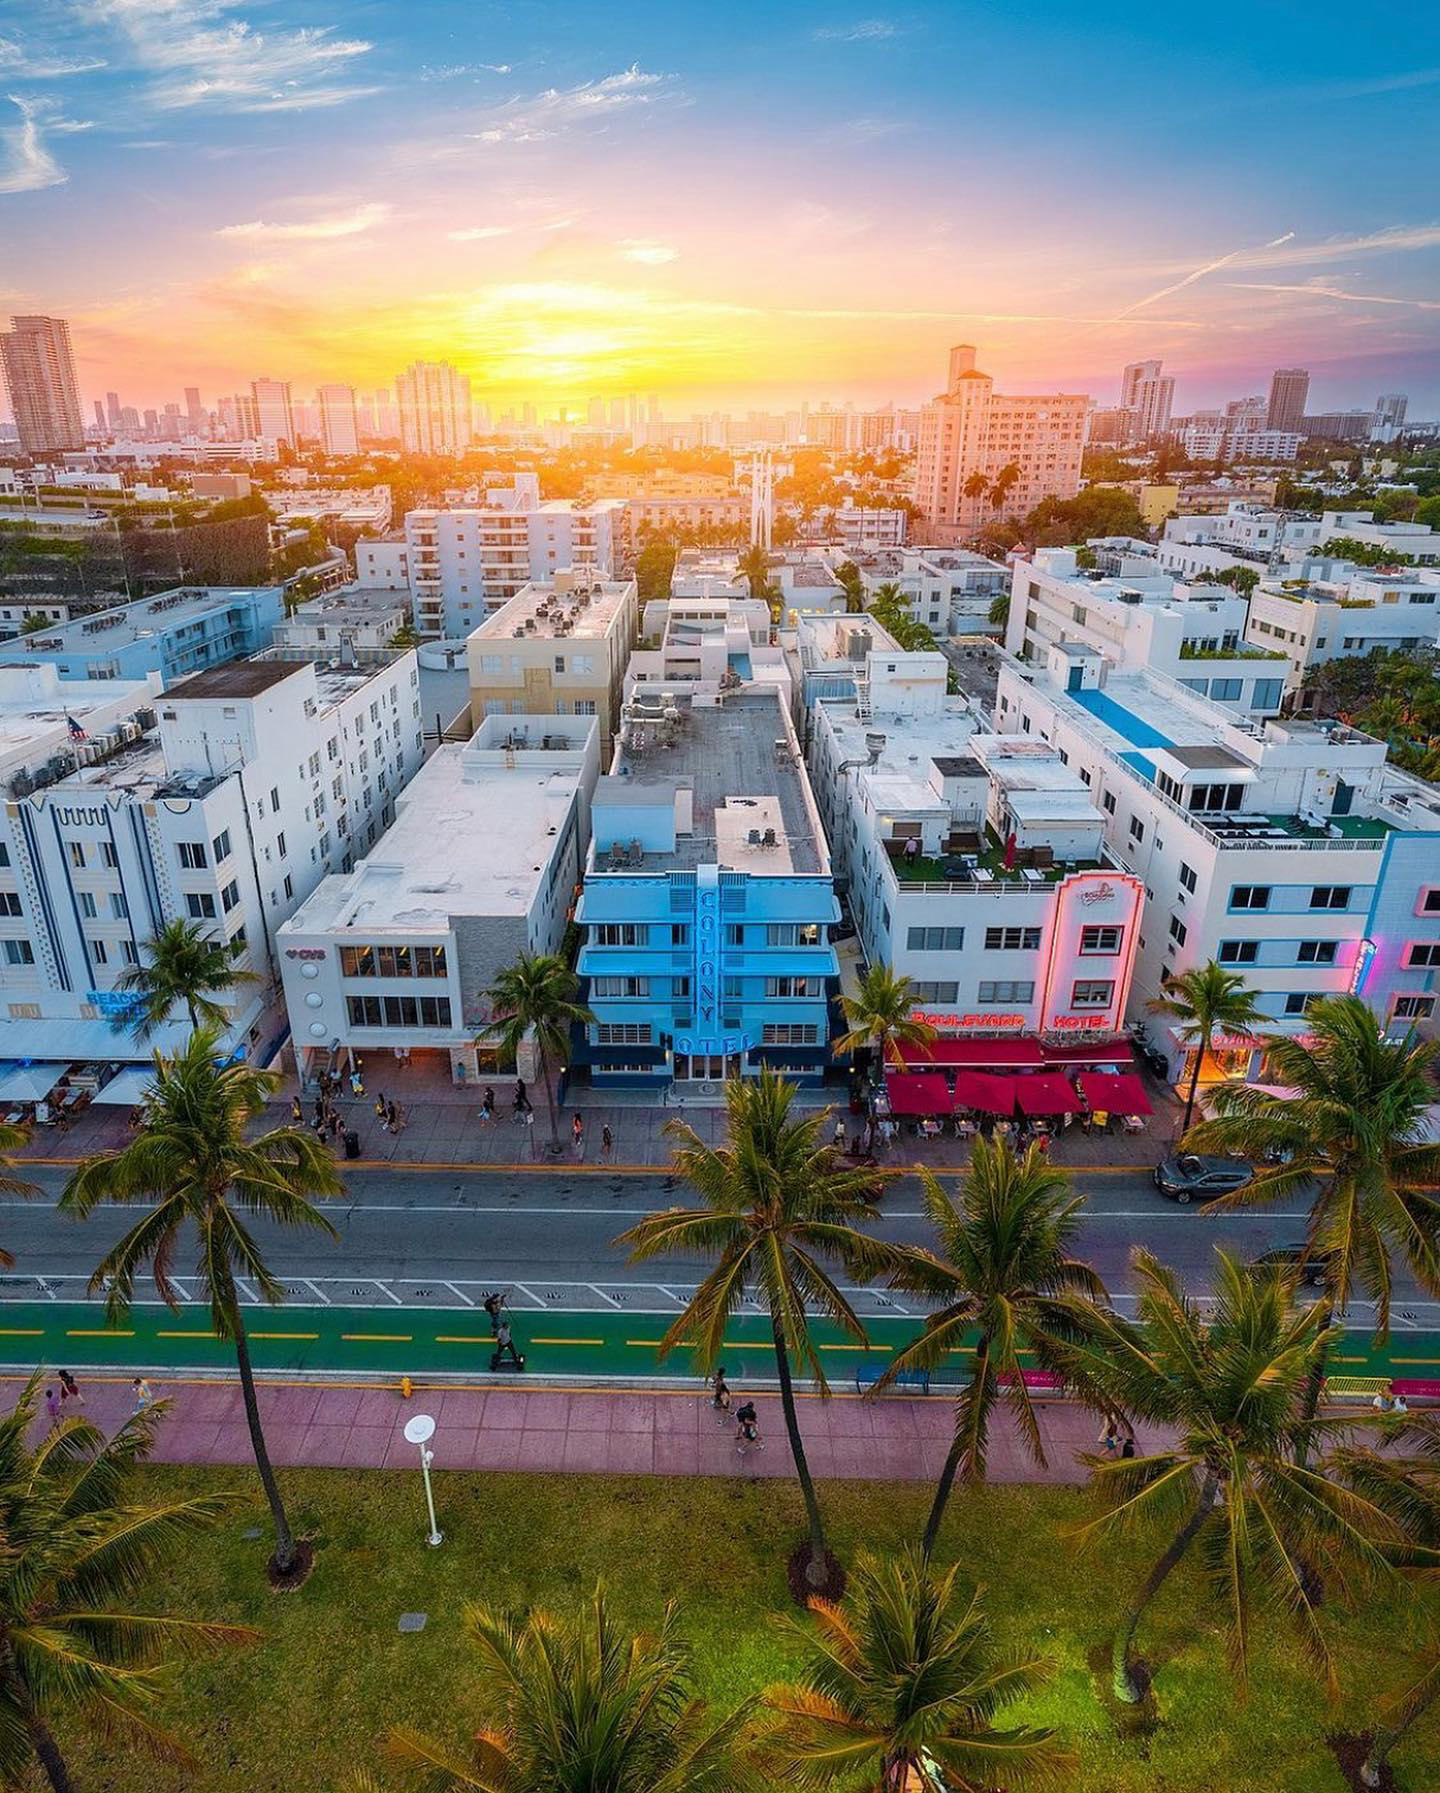 image  1 Miami - Sunset on ocean drive